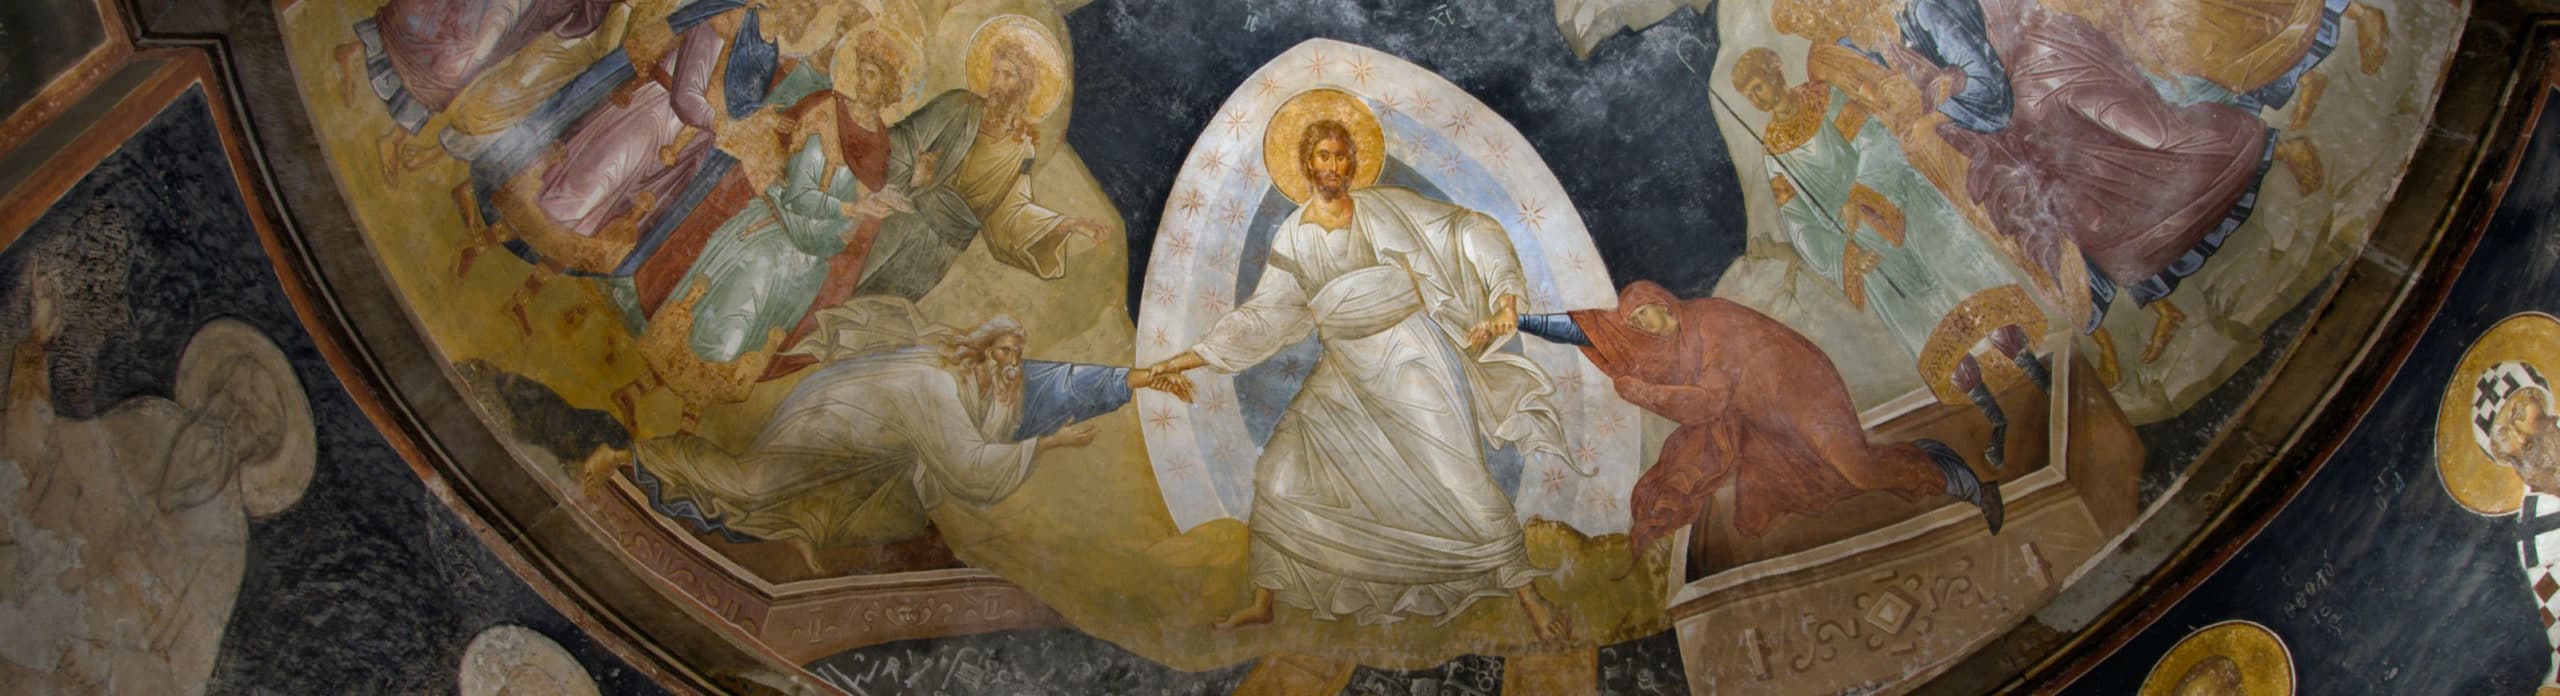 Jesus' Resurrection